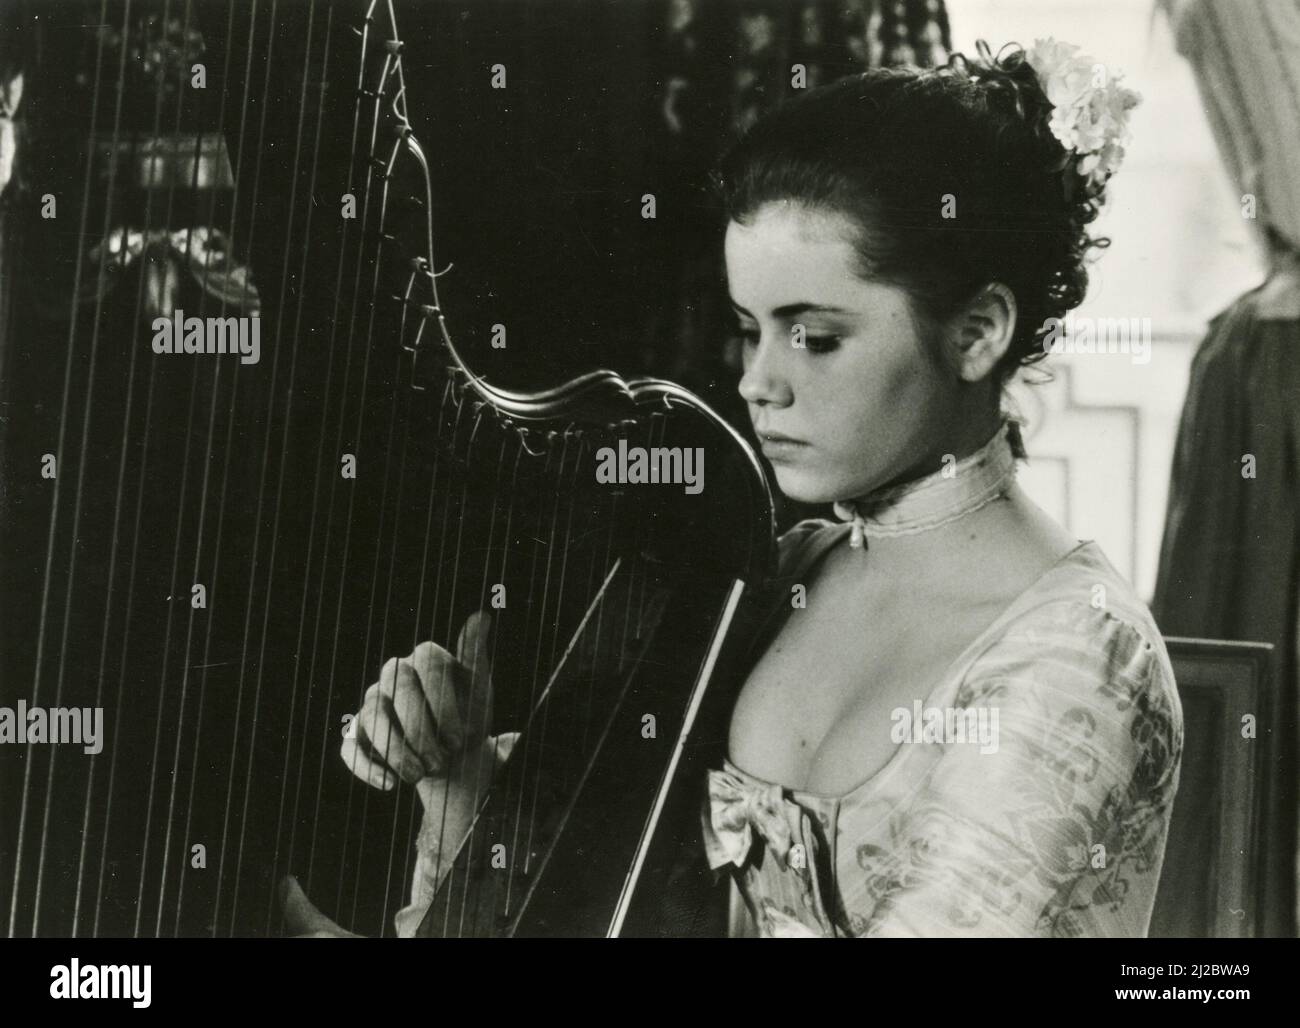 American actress Fairuza Balk in the movie Valmont, USA 1989 Stock Photo